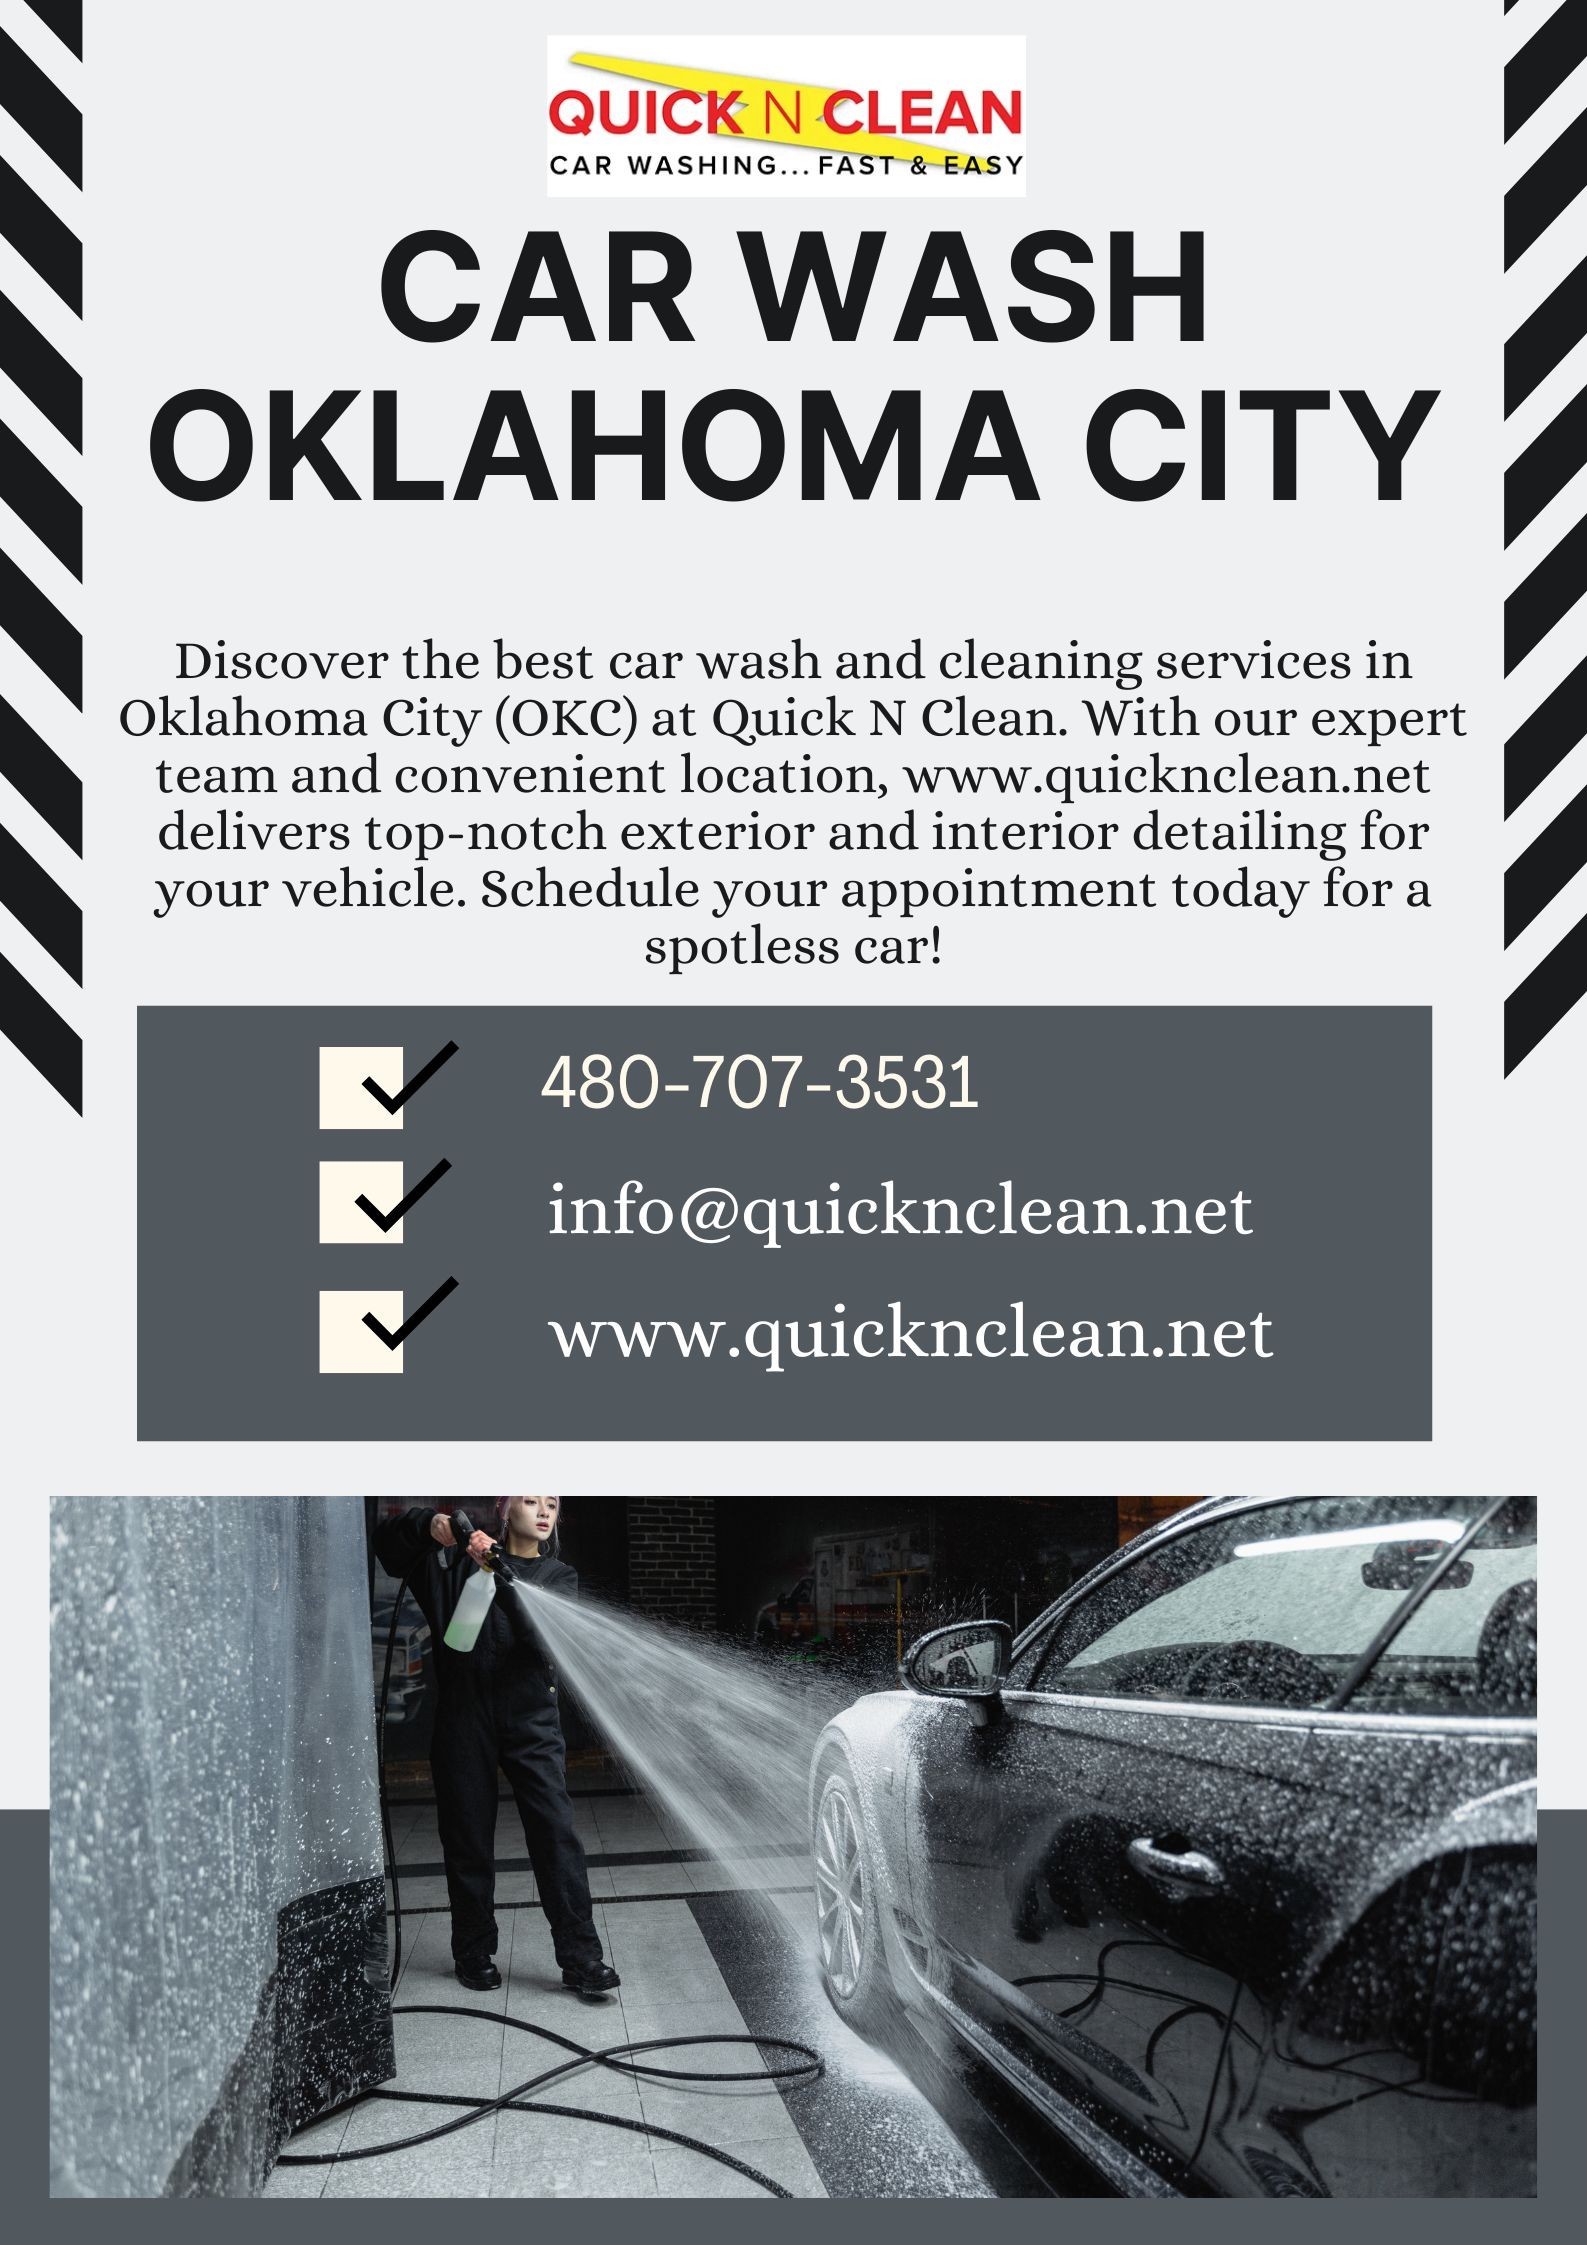 Car Wash Oklahoma City - quicknclean.net